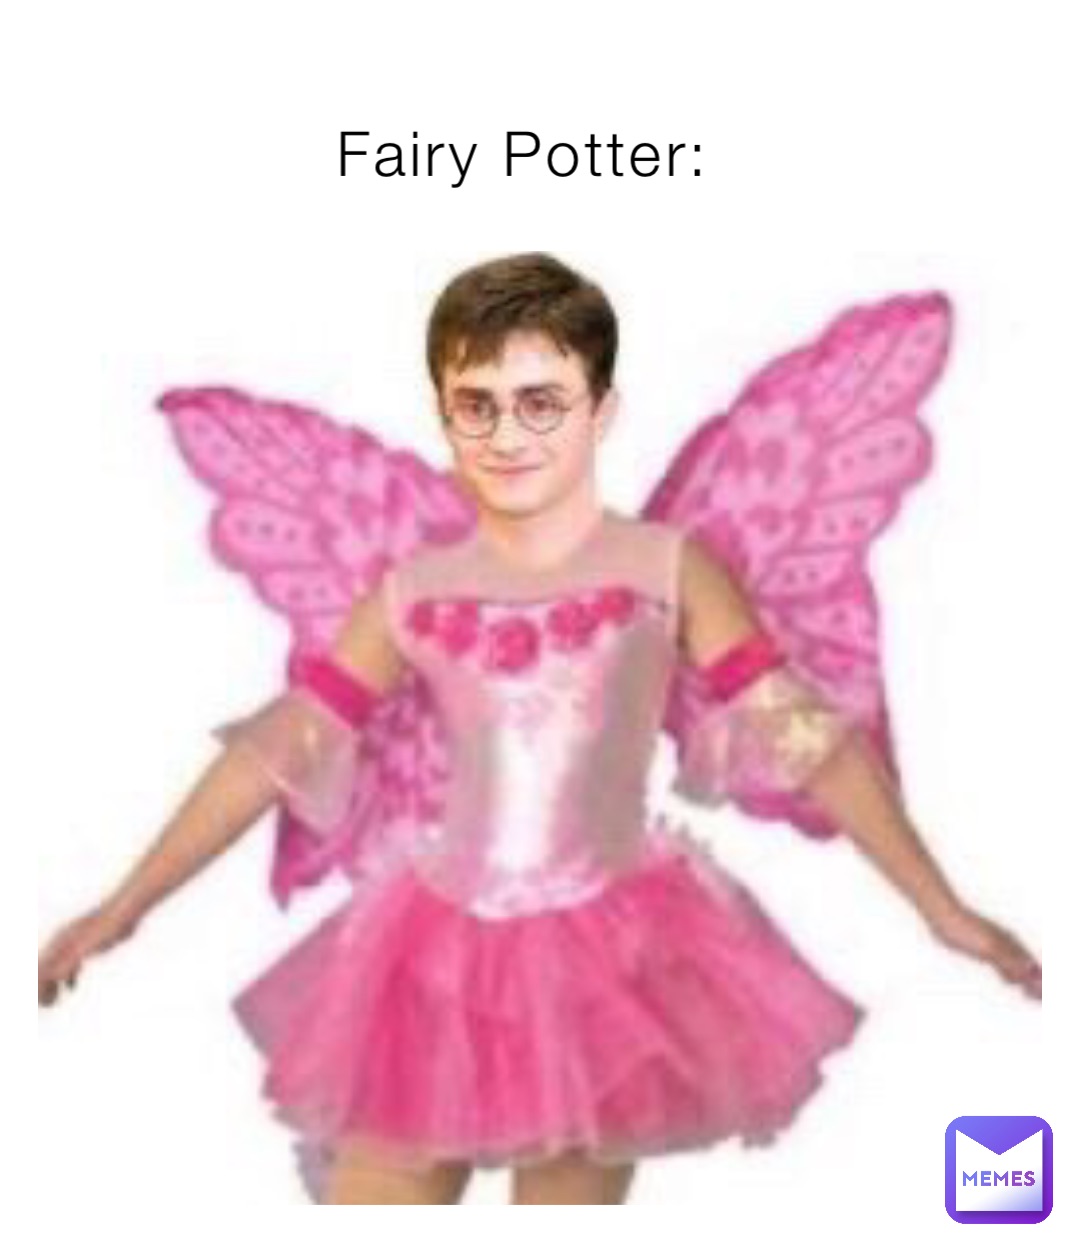 Fairy Potter: